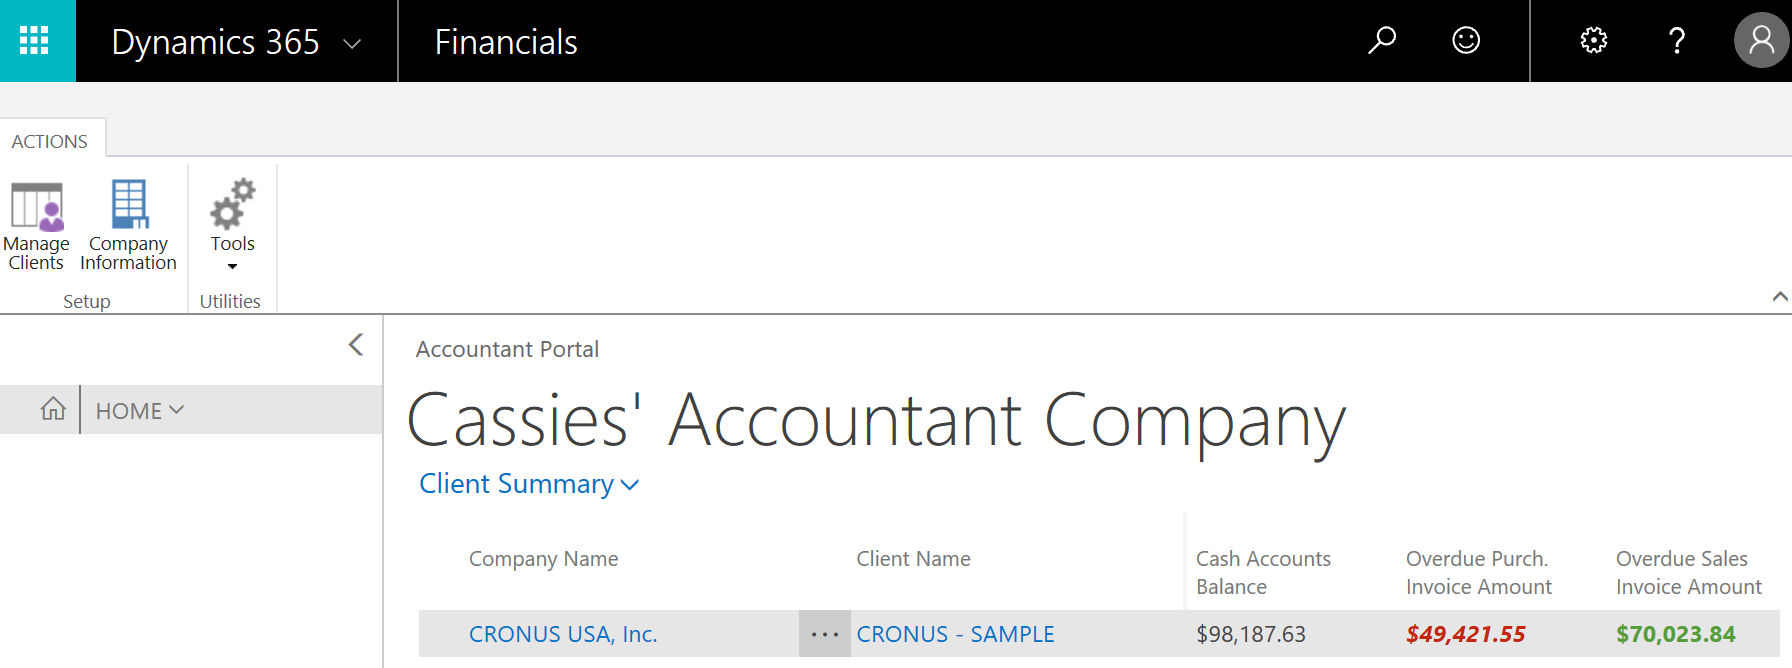 Accountant Portal